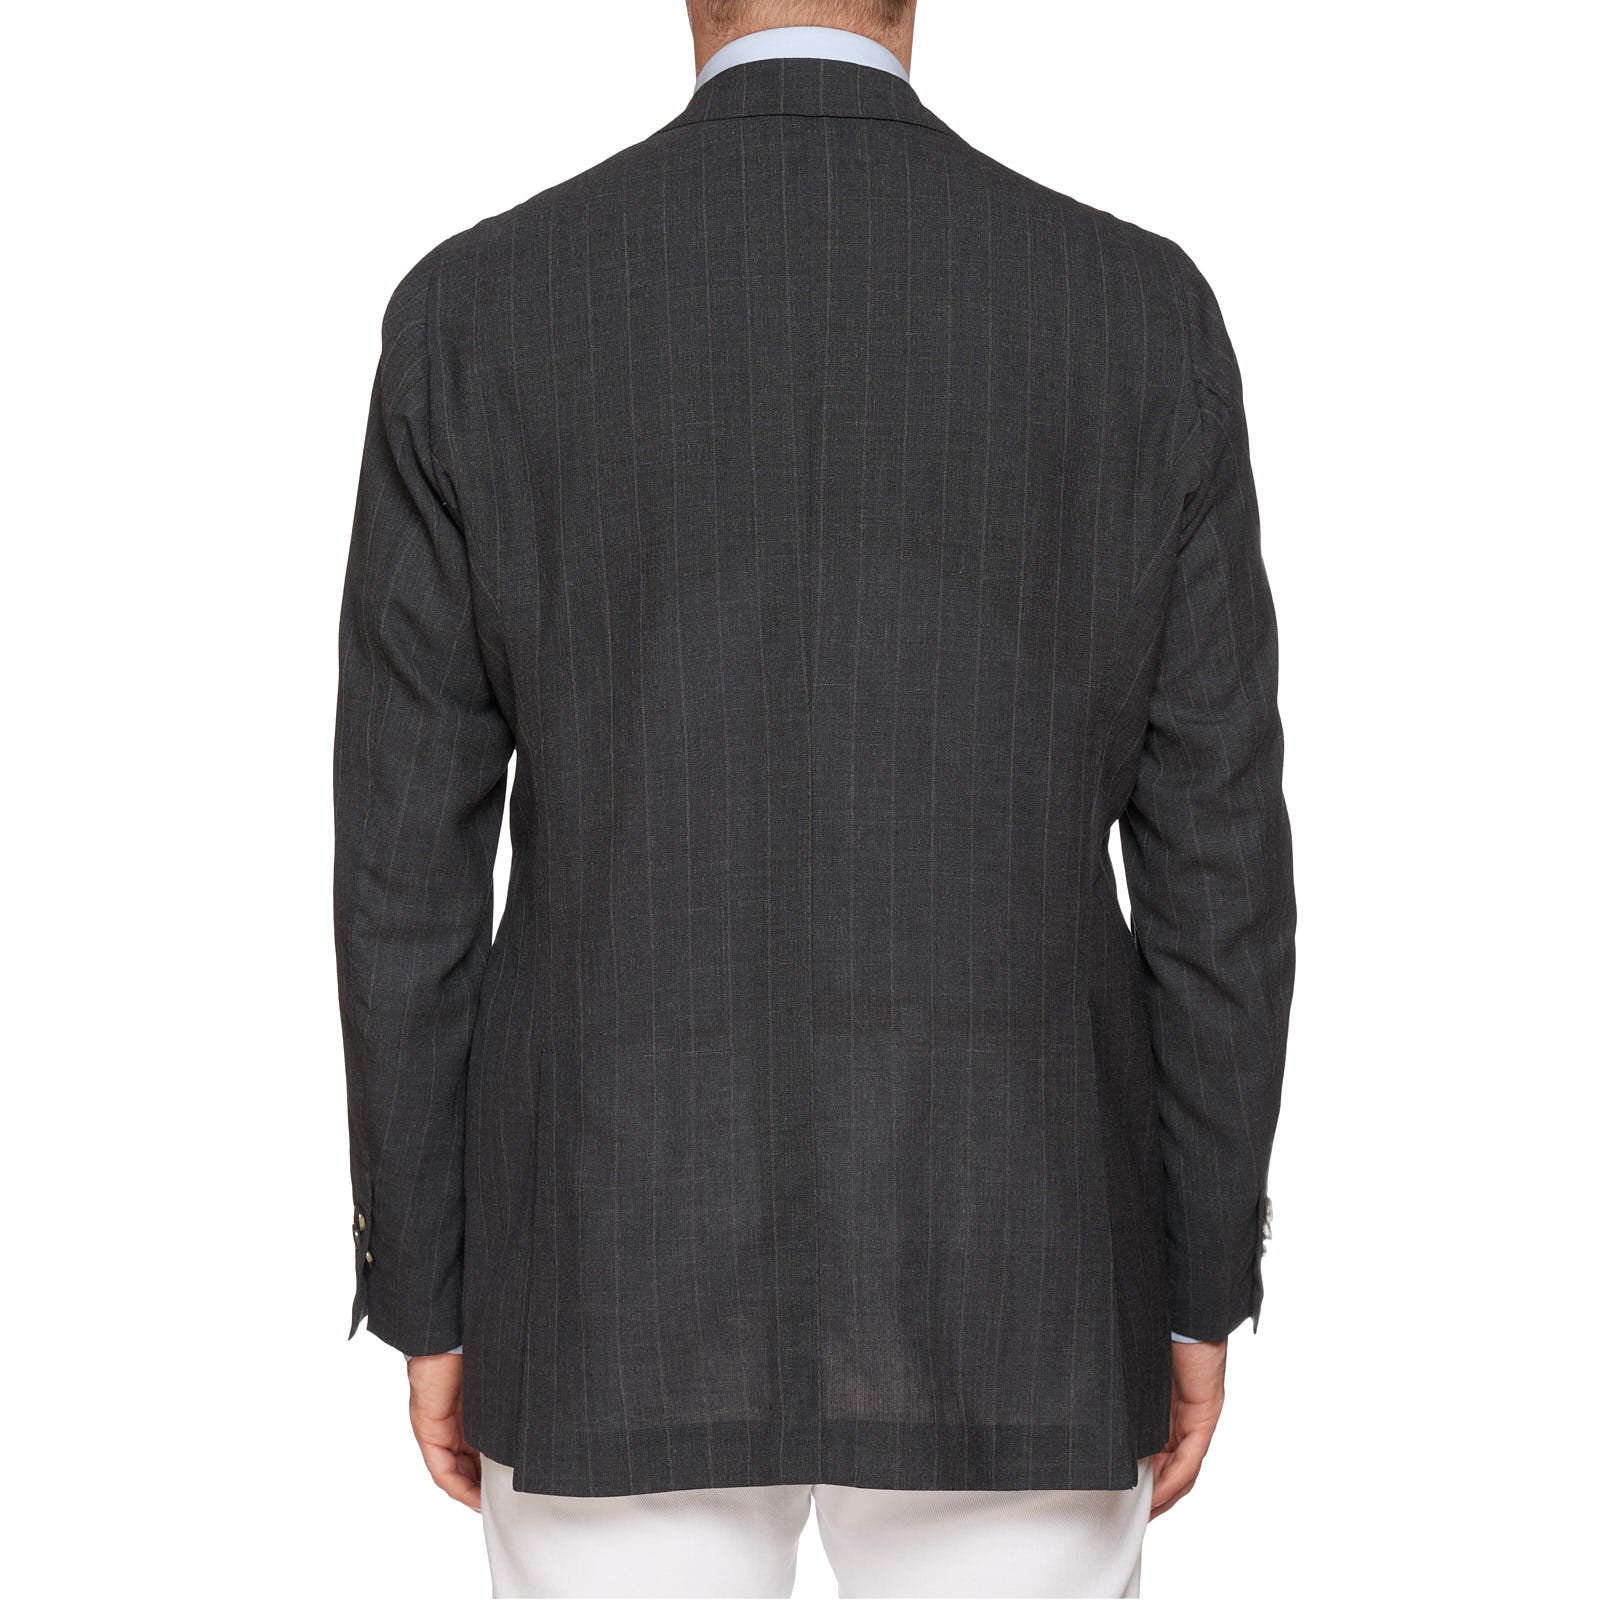 RUBINACCI LH Handmade Bespoke Gray Striped Mohair 1 Button Jacket EU 50 US 40 RUBINACCI